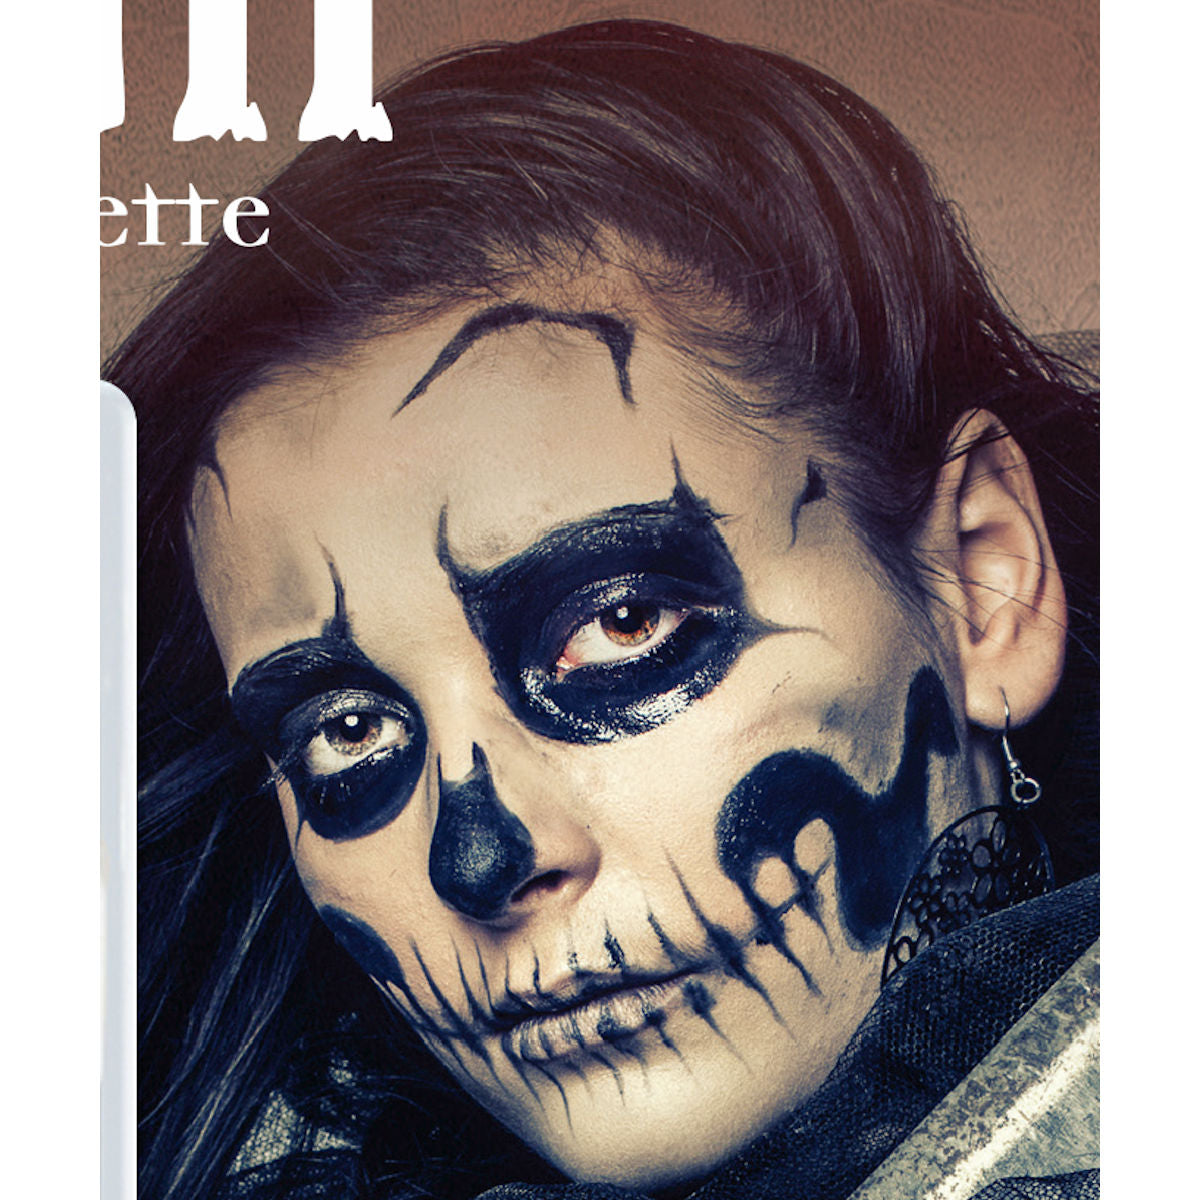 Skull Halloween Tri-Colour Makeup Palette Special FX Fancy Dress face make-up